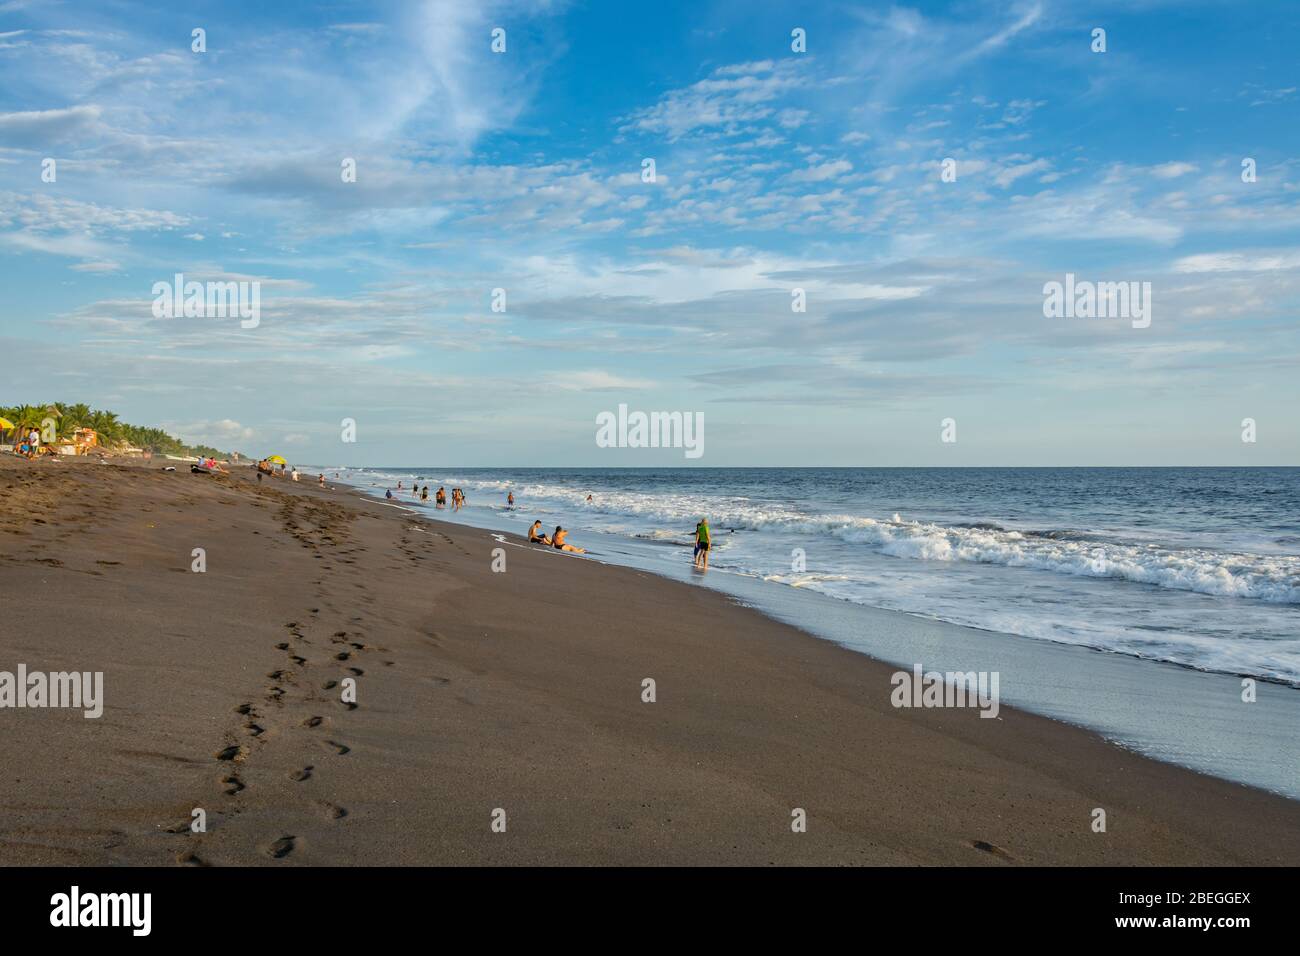 People enjoying the ocean at Monterrico Beach, Guatemala Stock Photo